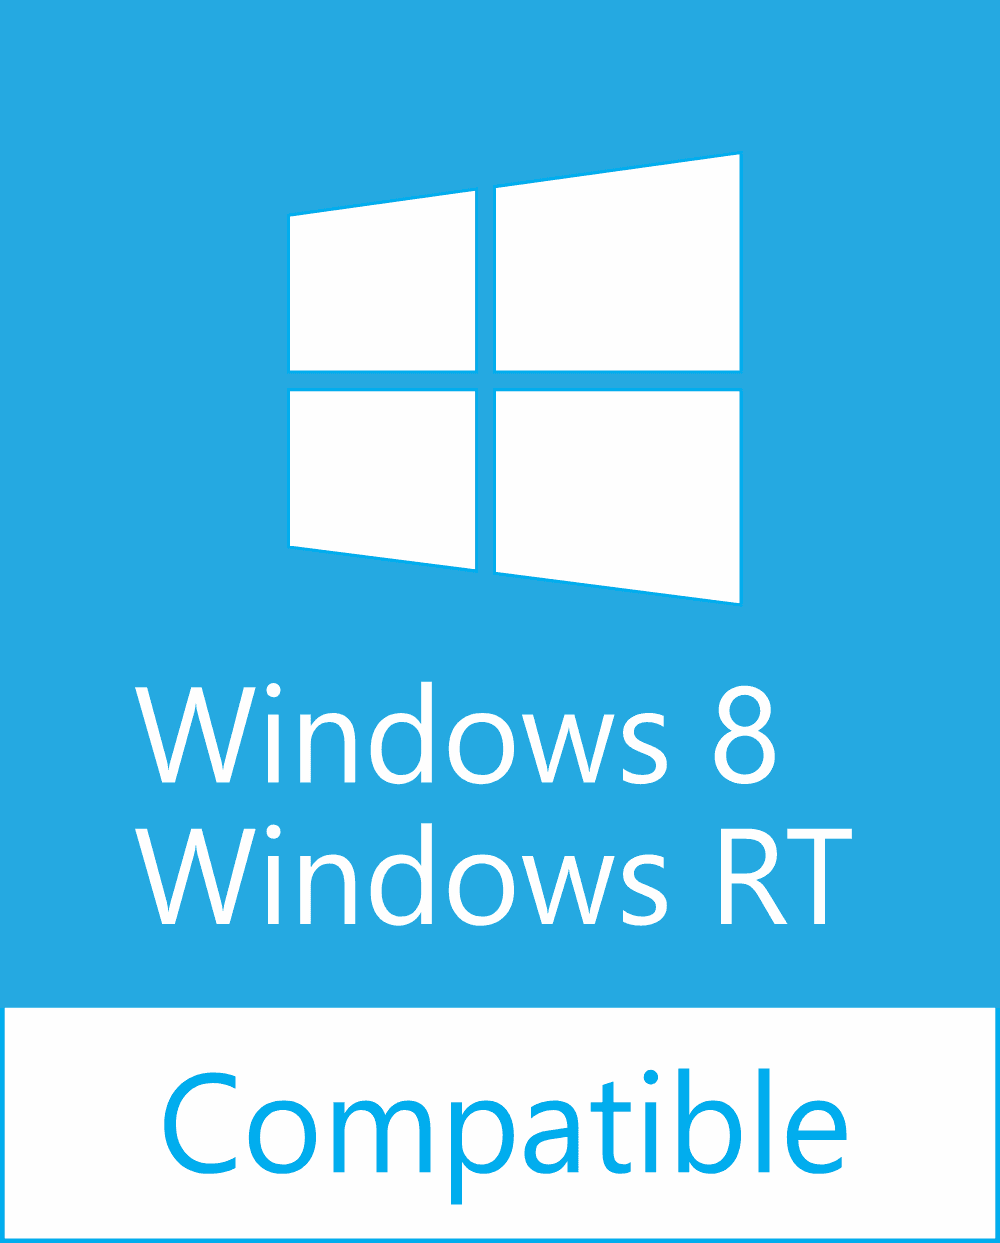 Windows 8/RT Compatible Logo download